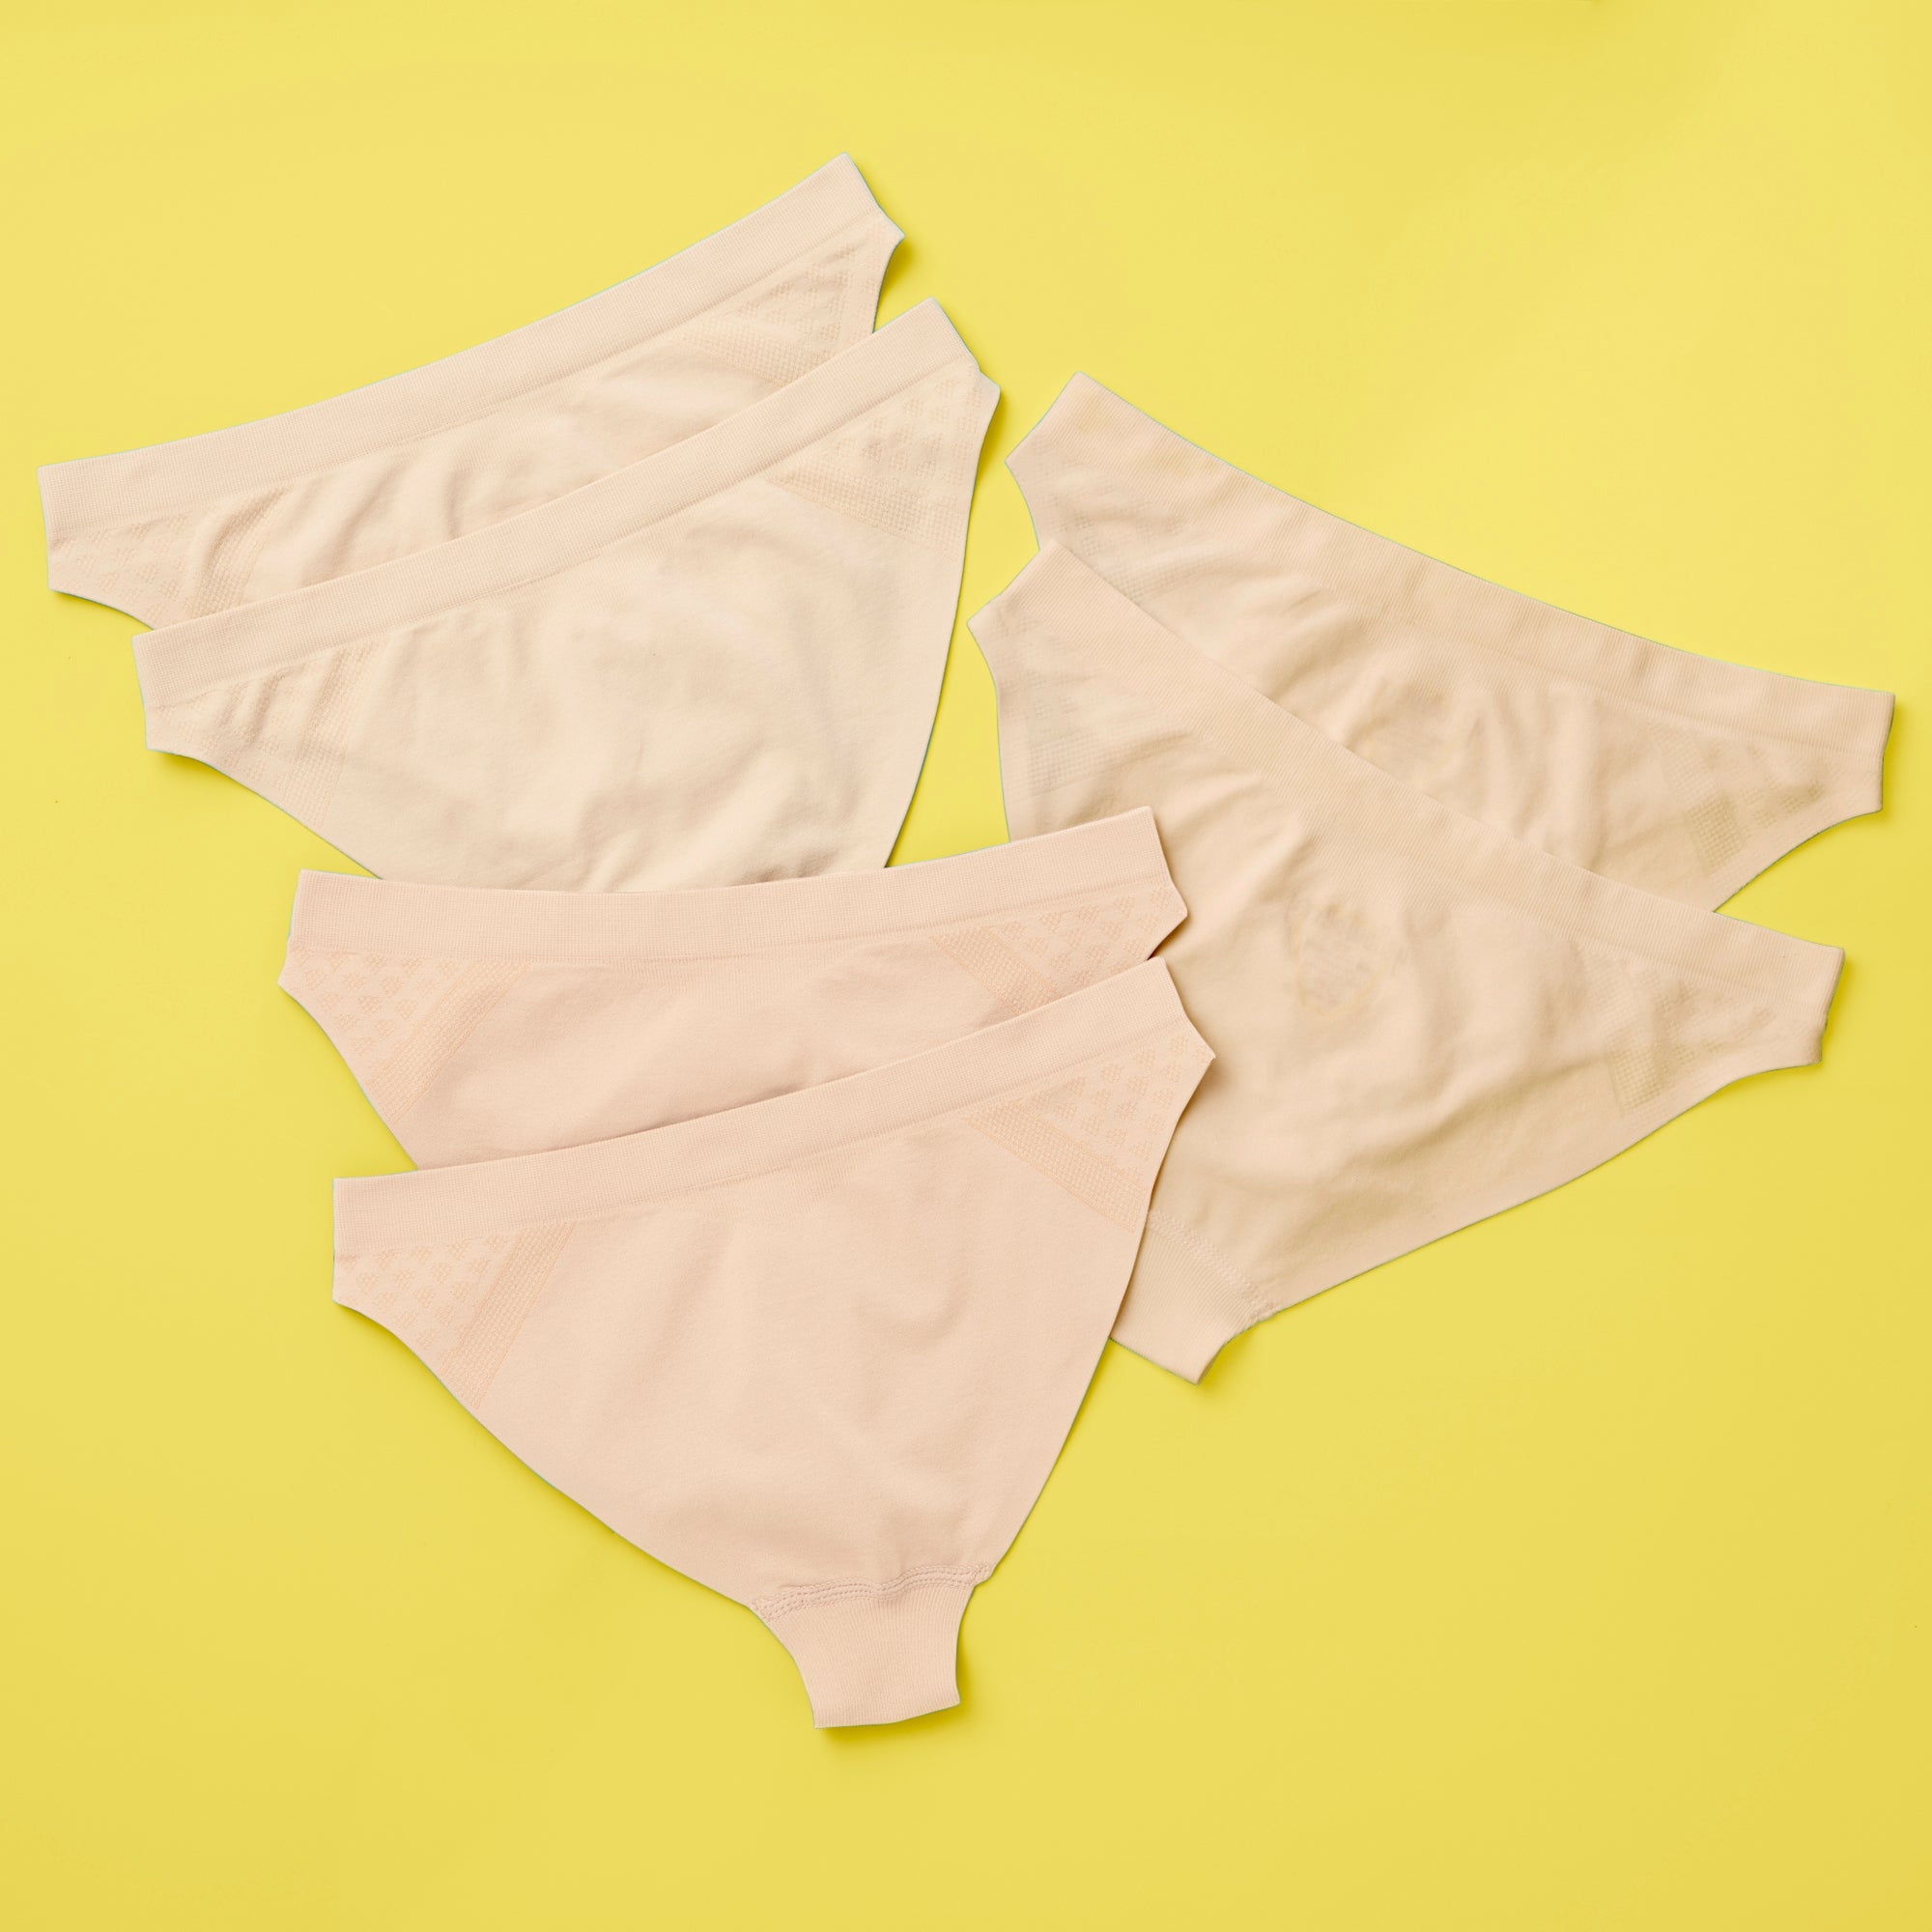 BEST Girls Seamless Underwear – Bundle of Six Pair for $36